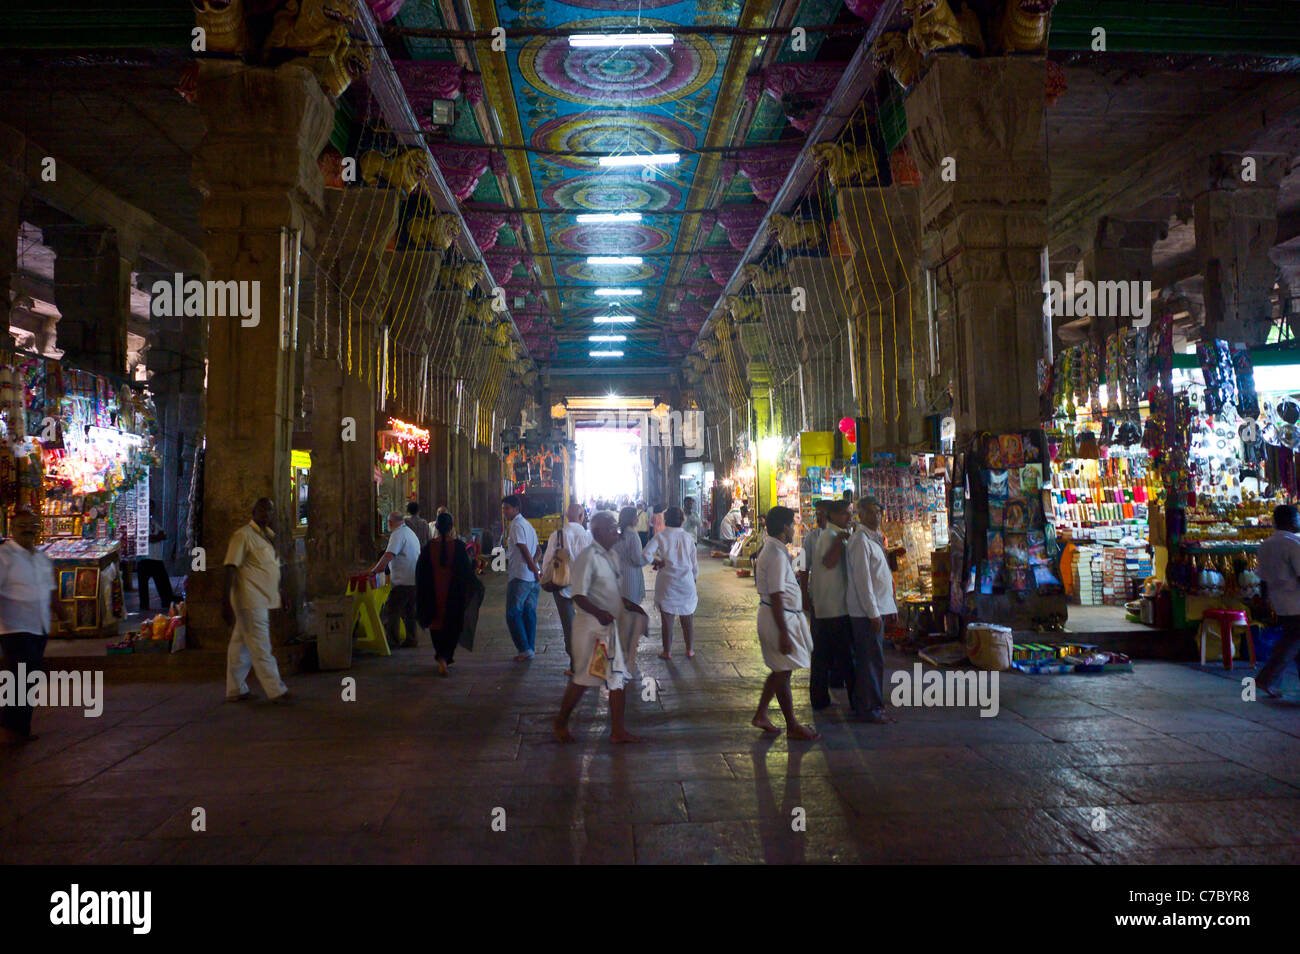 In the Meenakshi Amman temple in Madurai, Tamil Nadu, India. Stock Photo